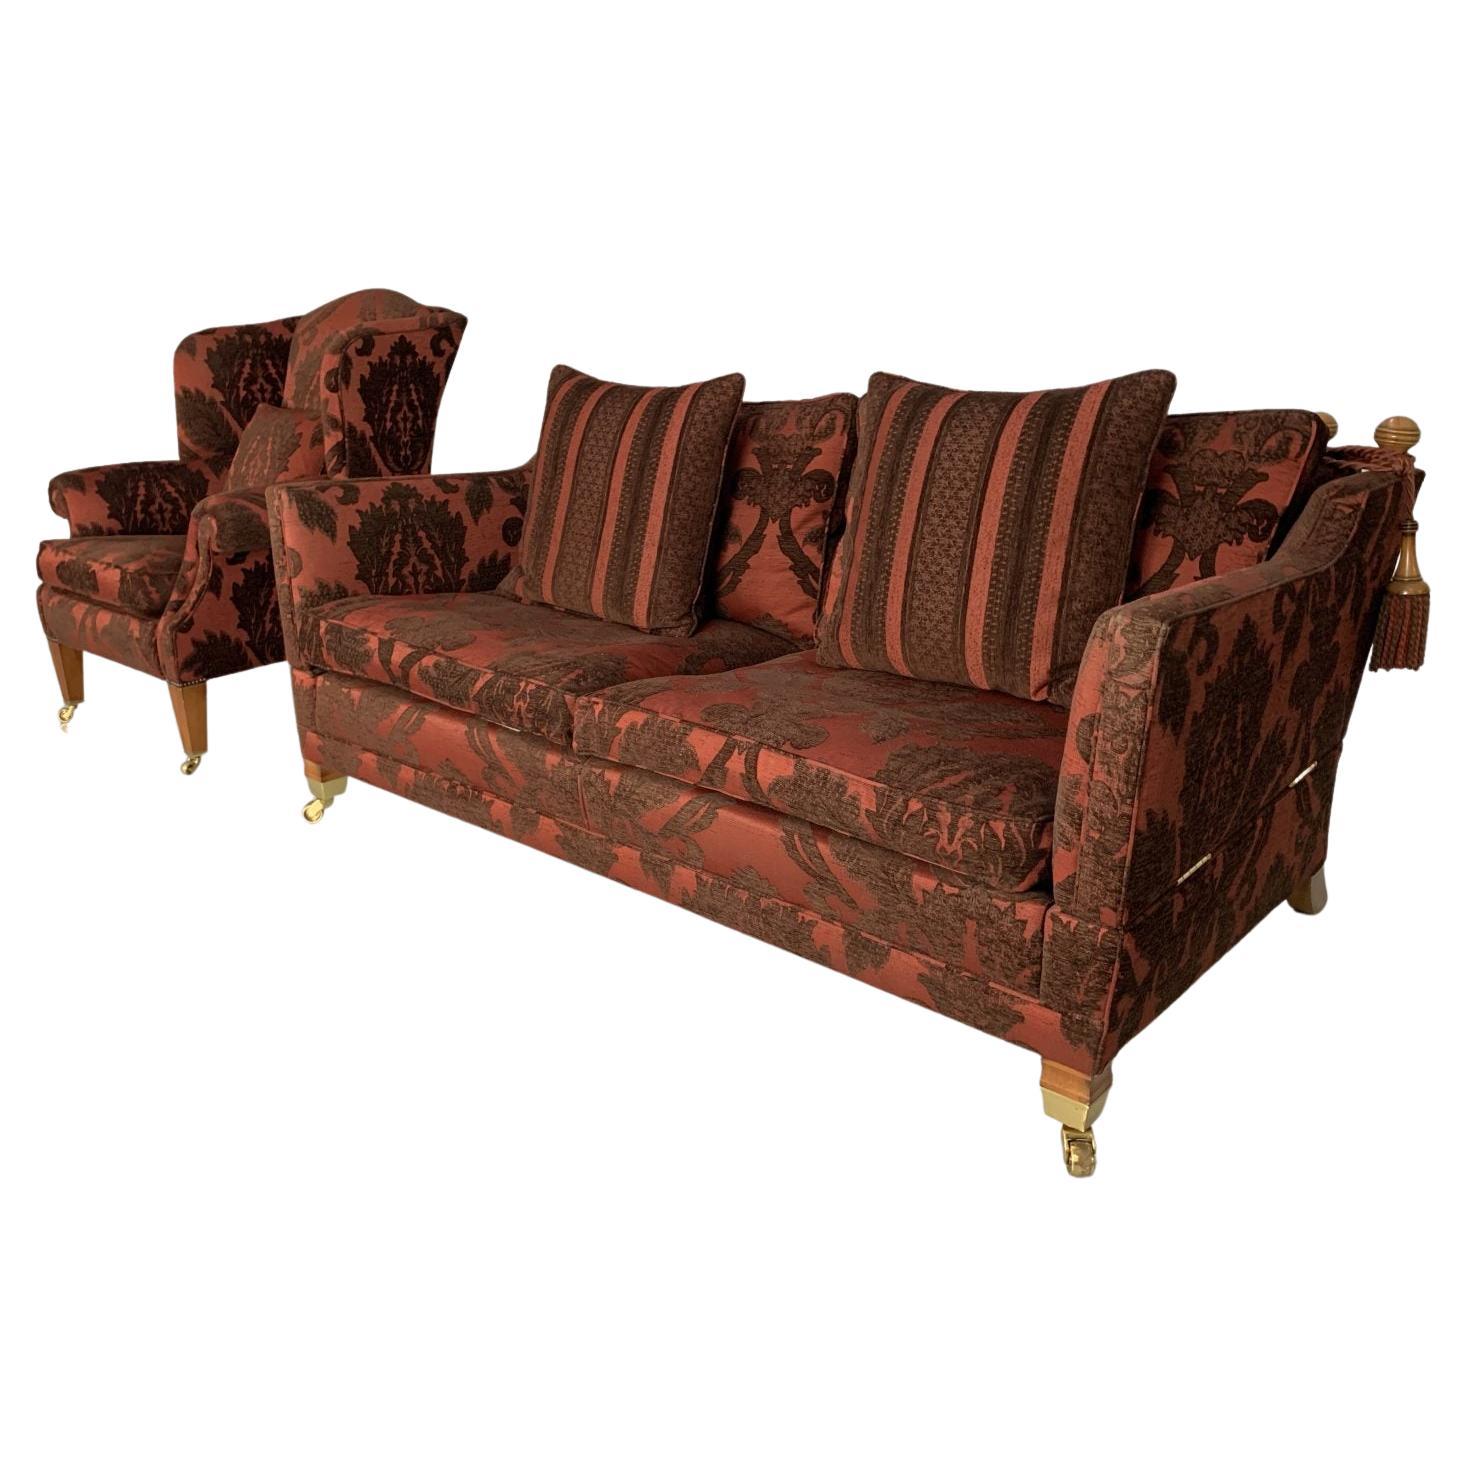 Duresta “Trafalgar” Sofa & “Devonshire” Armchair, in Deep Red Damask For Sale